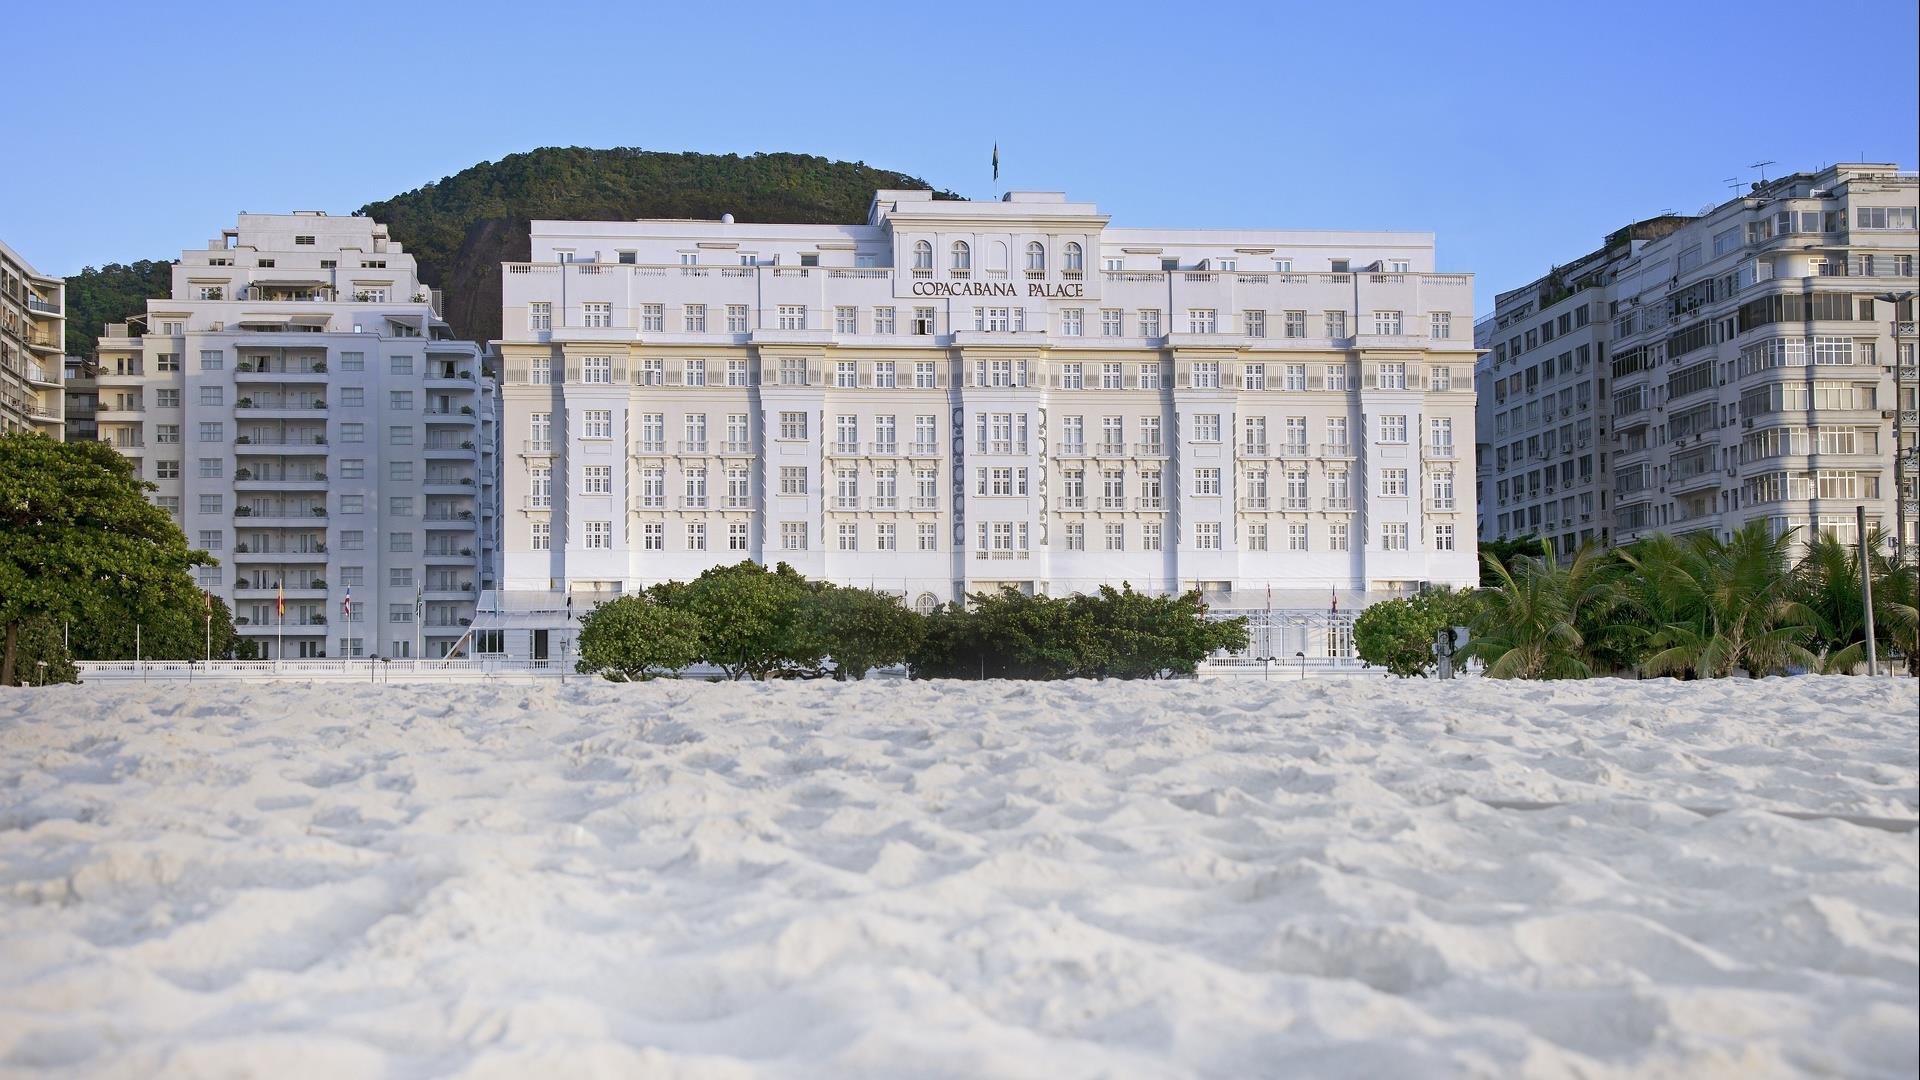 Deluxe Hotel Belmond Copacabana Palace in Rio de Janeiro, Brazil